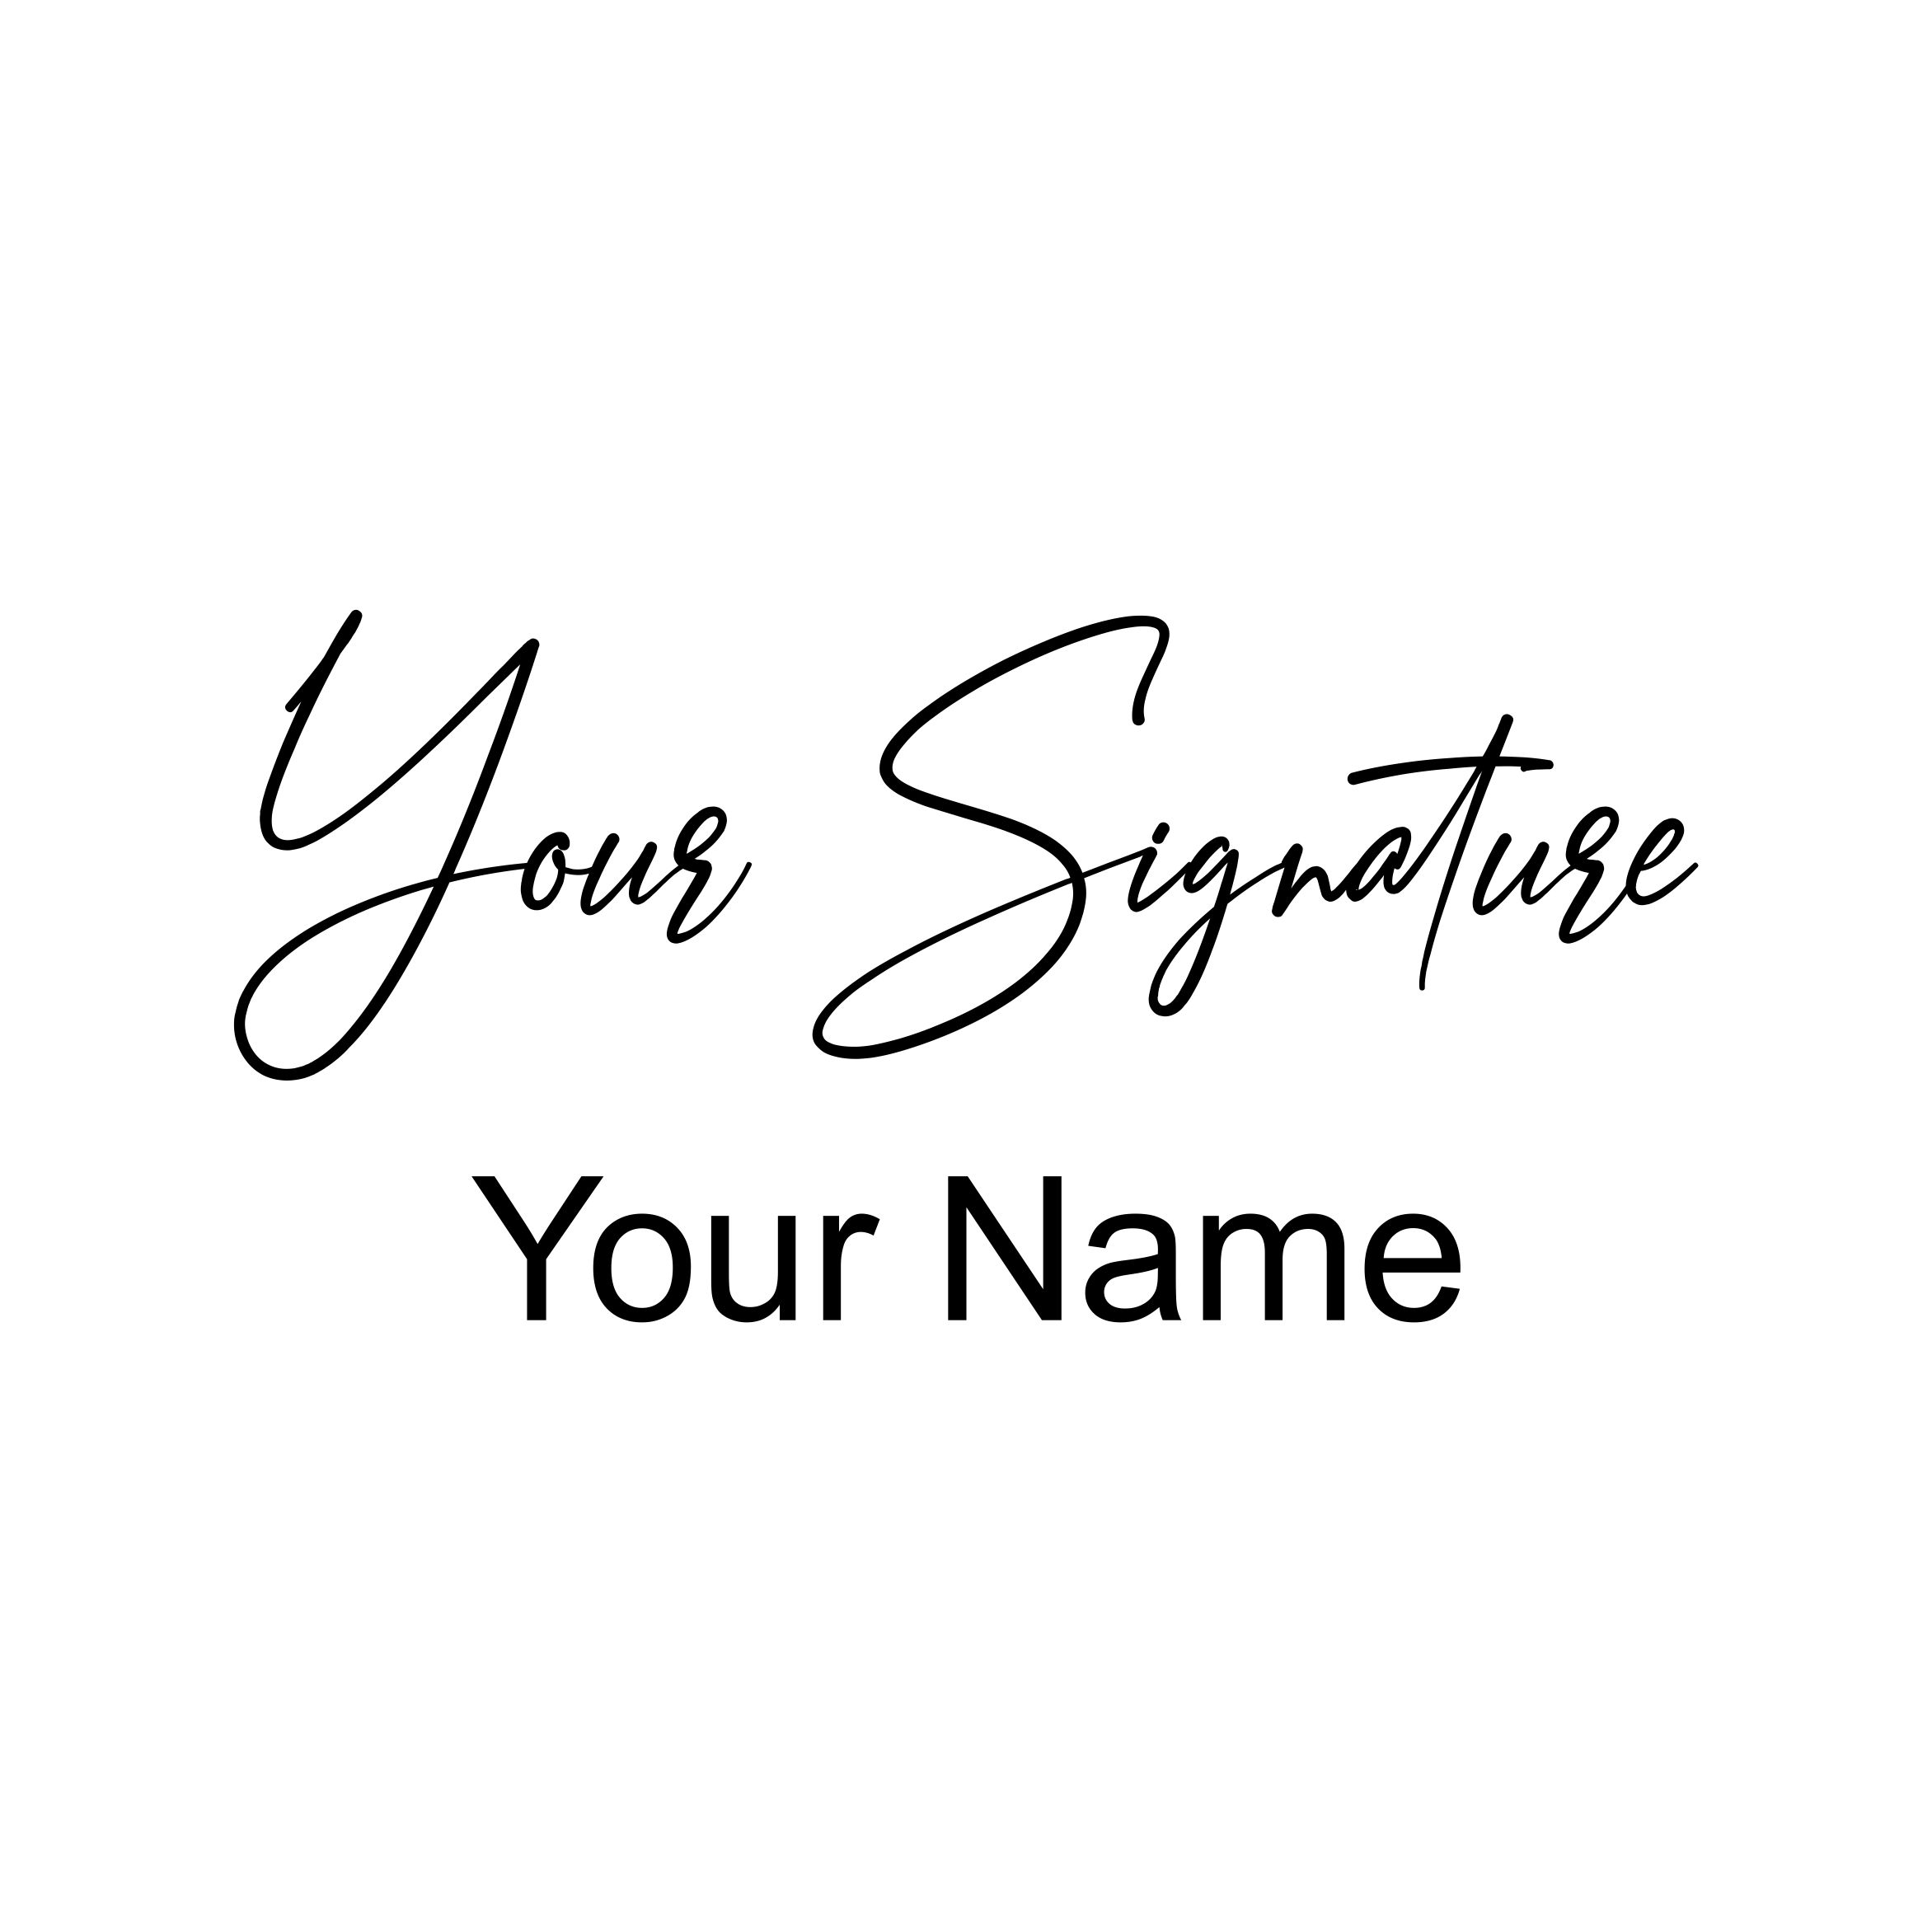 Custom Name Stamp Self Inking Signature Stamp Upload Your Signature 